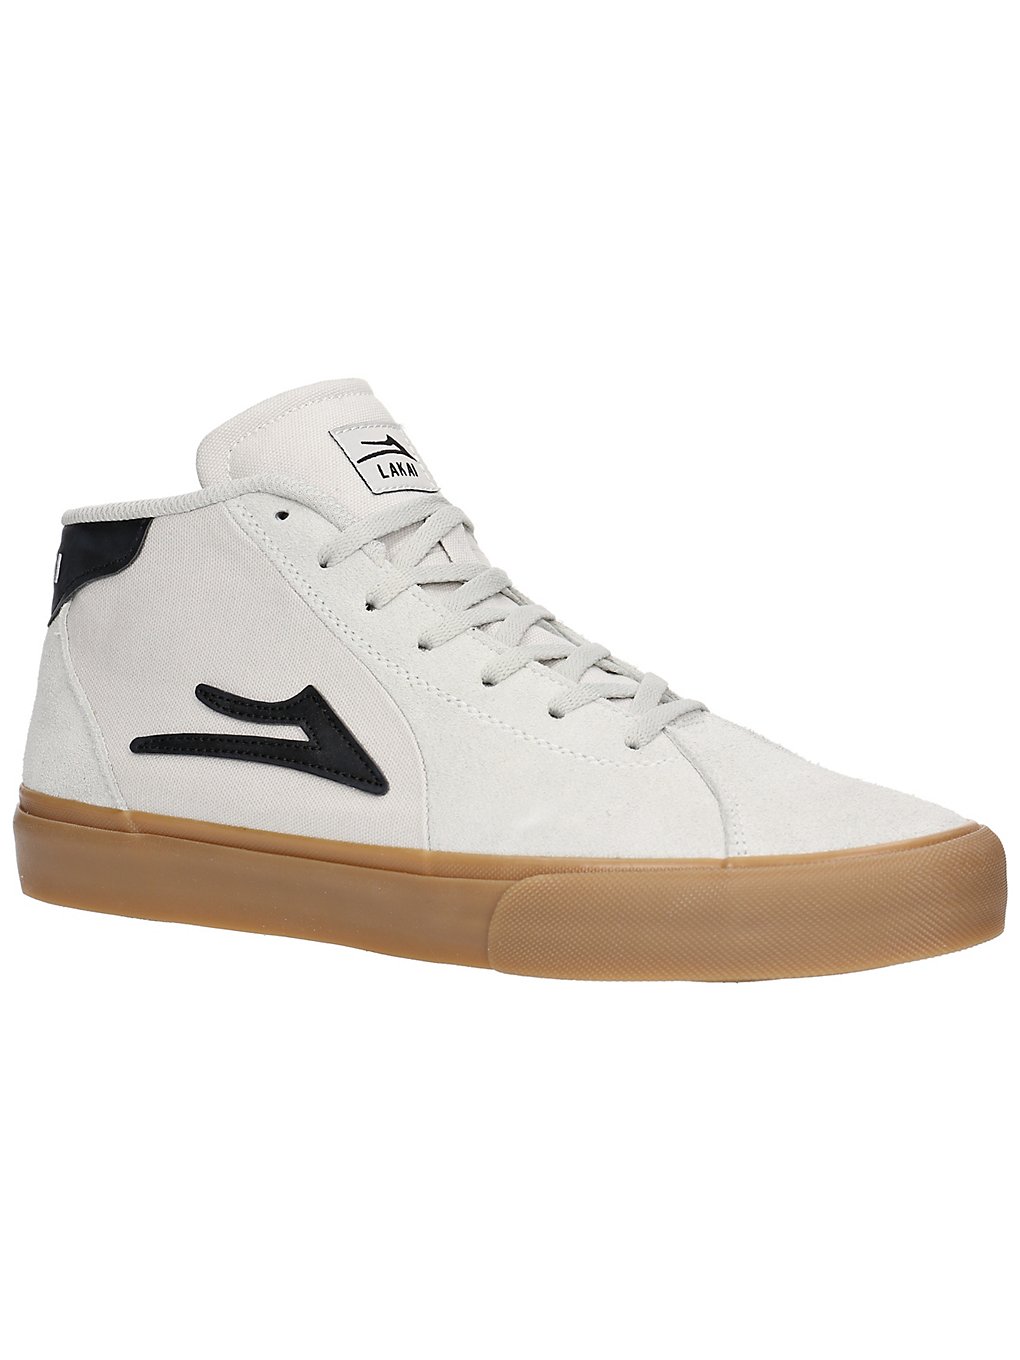 Lakai Flaco II Mid Skate Shoes white/gum suede